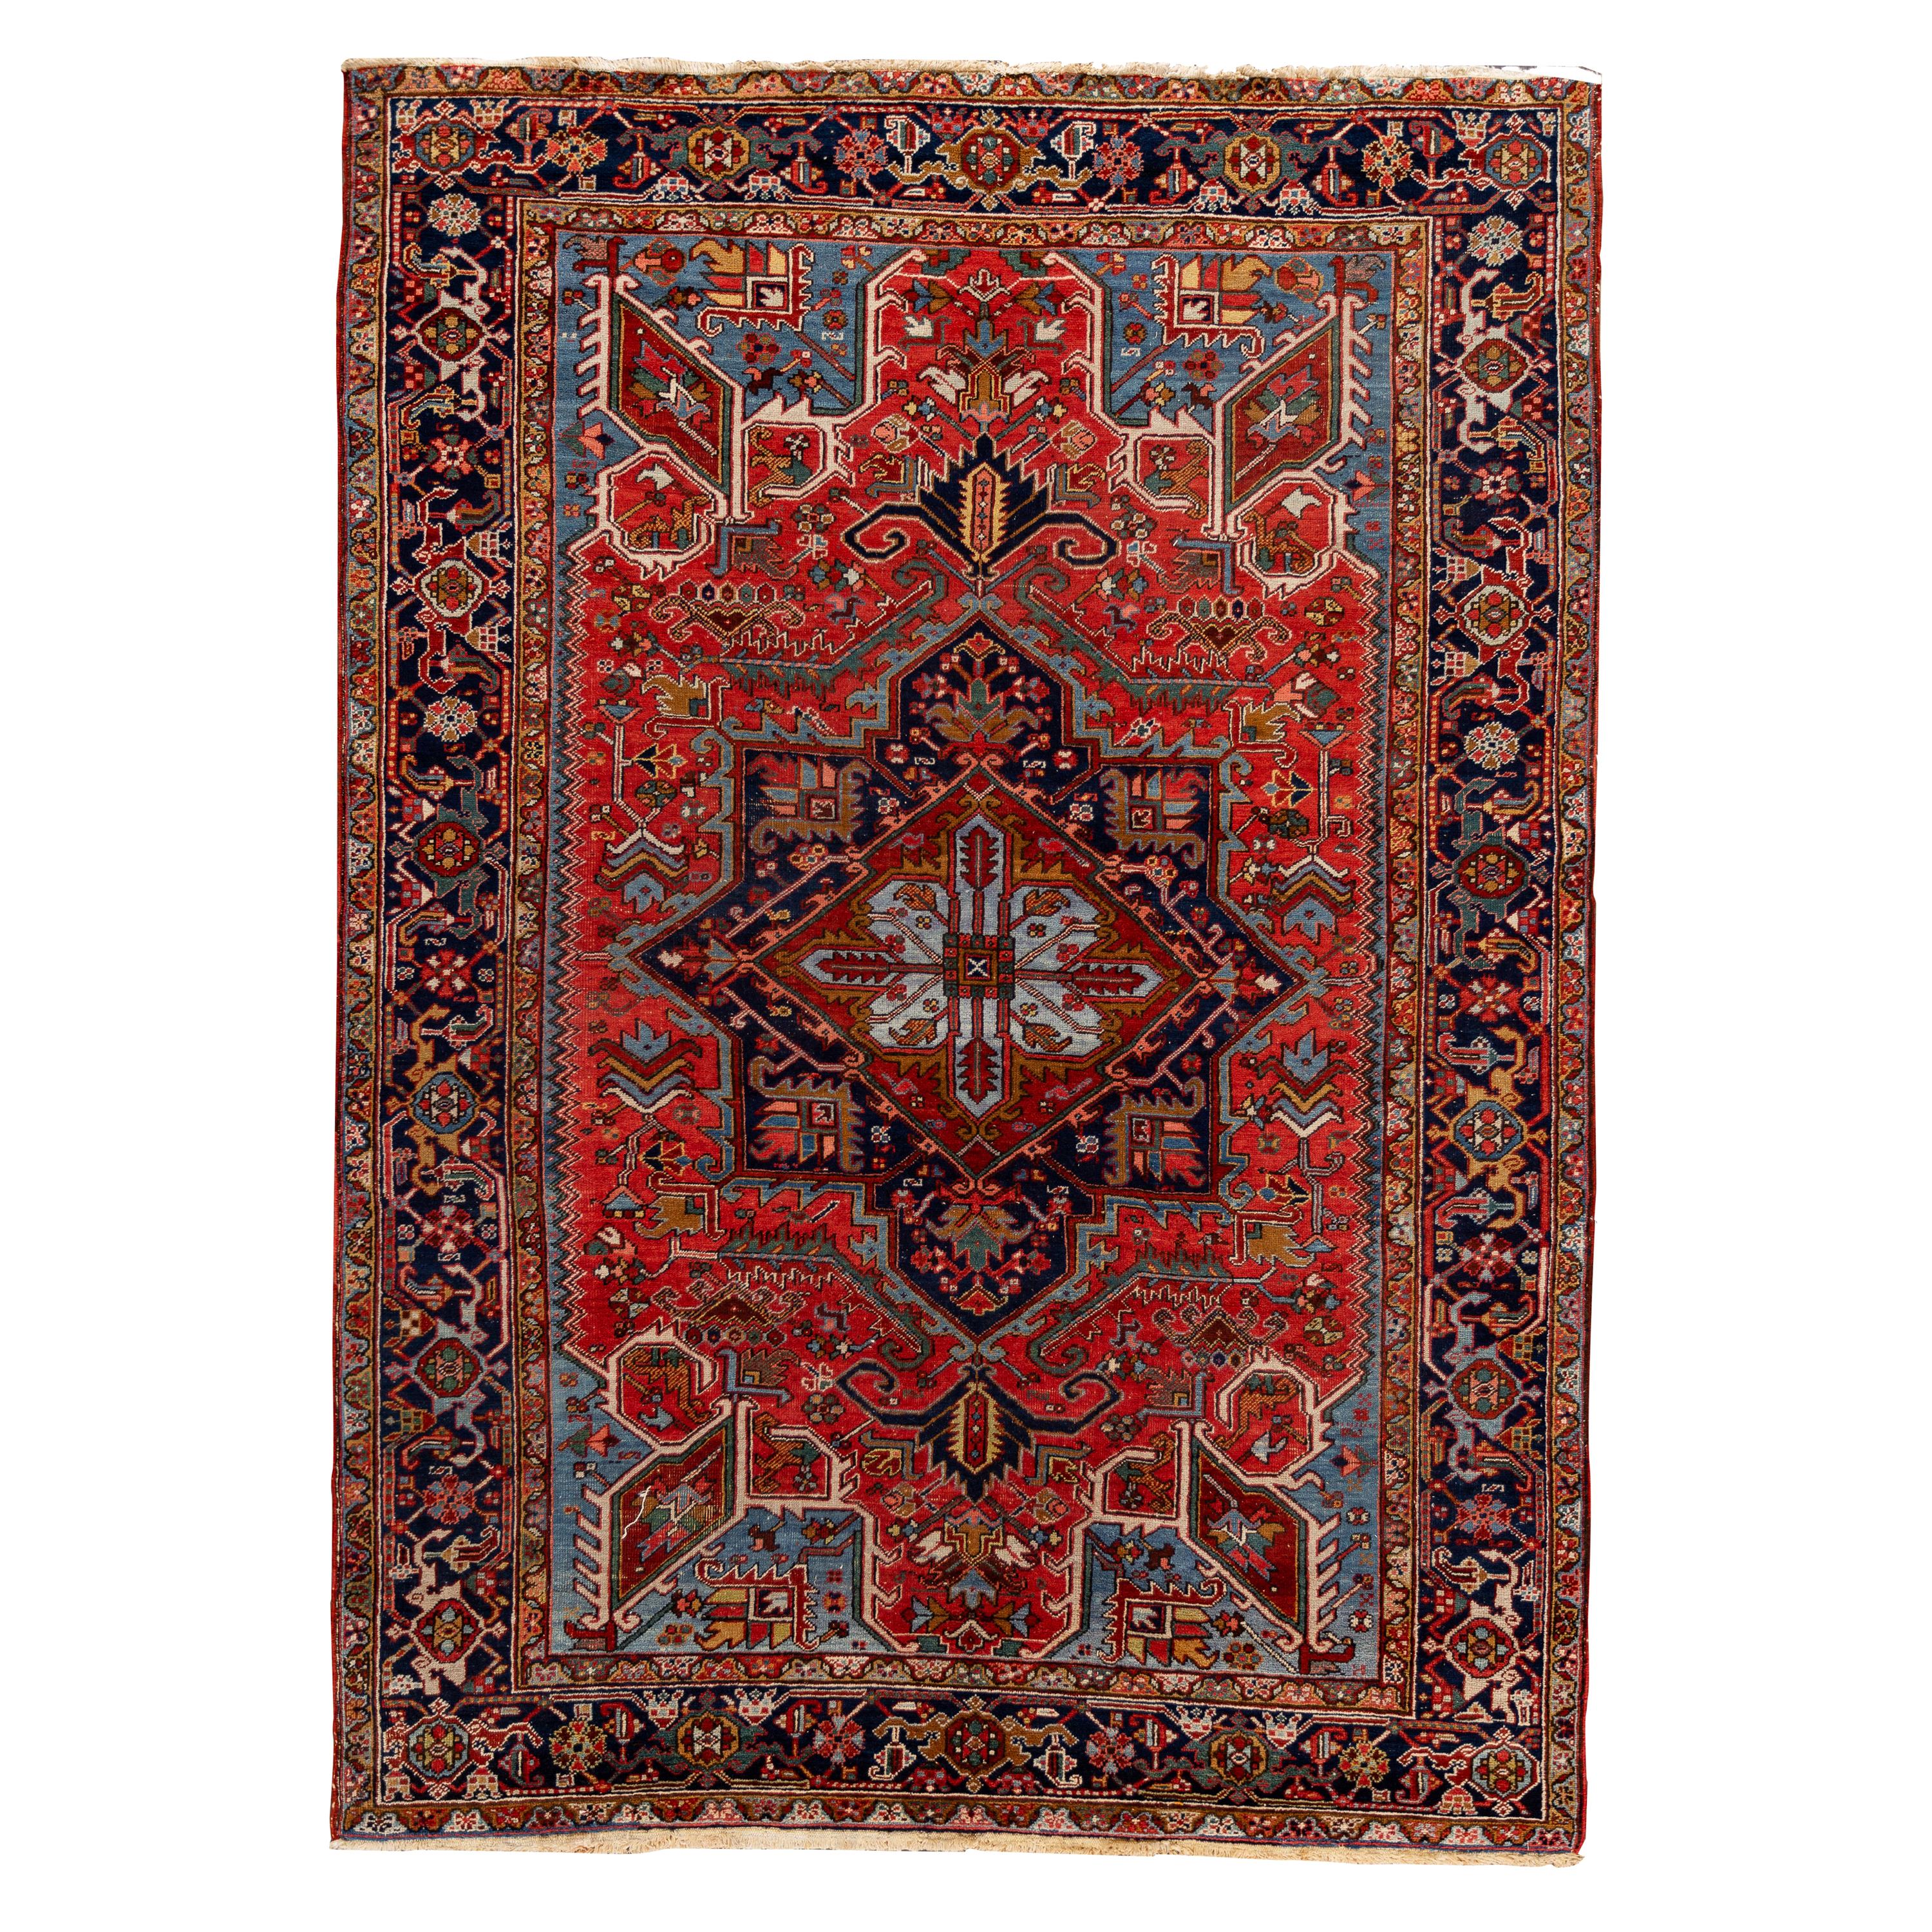 Early 20th Century Antique Persian Heriz Rug